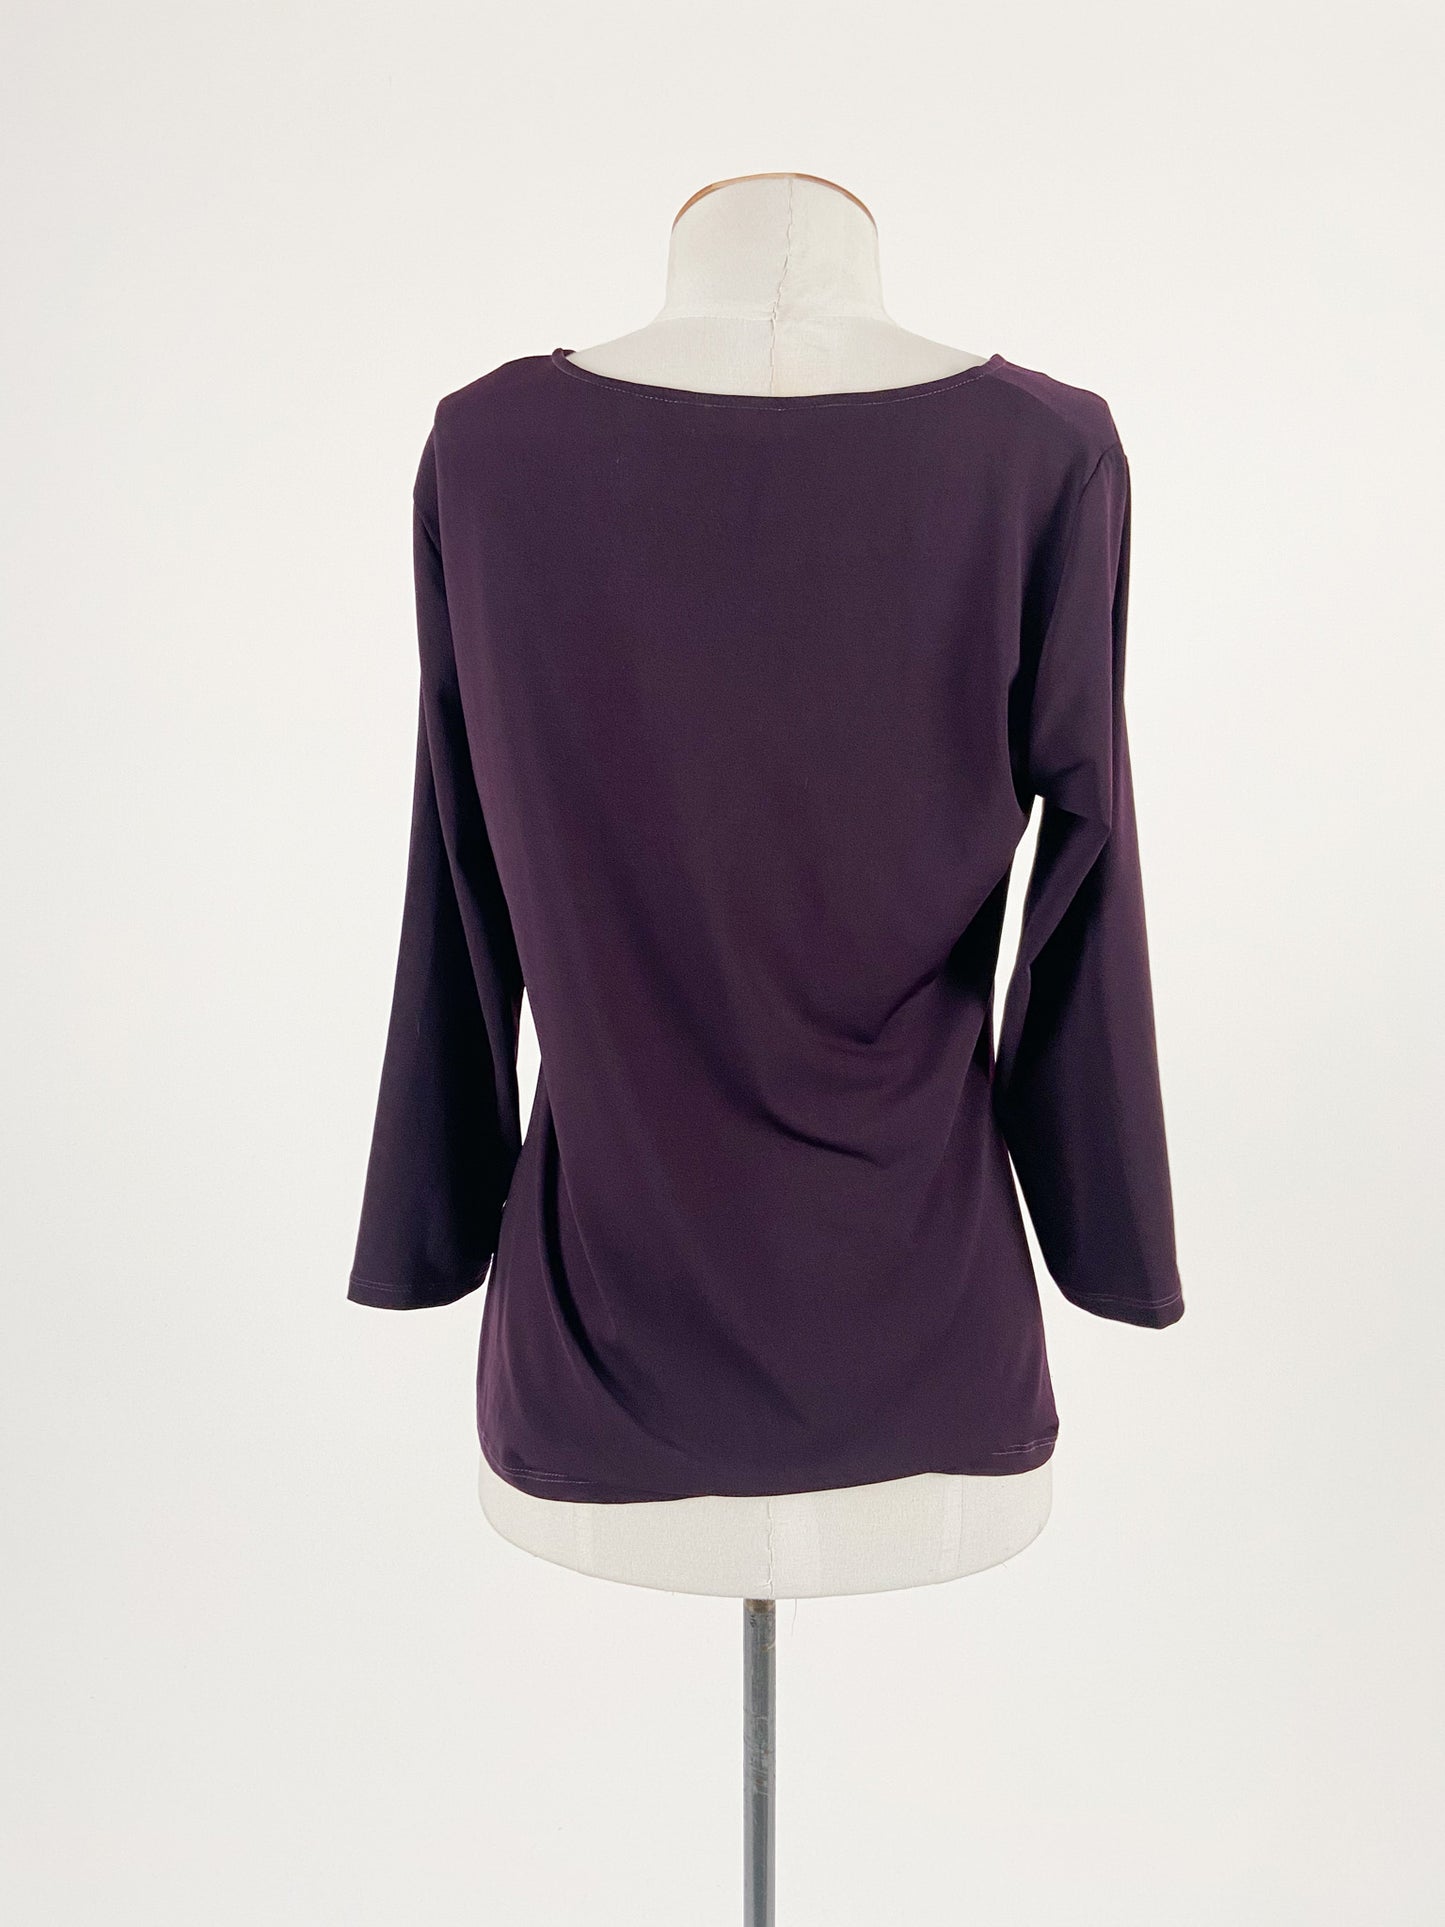 Oliver Black | Purple Workwear Top | Size M